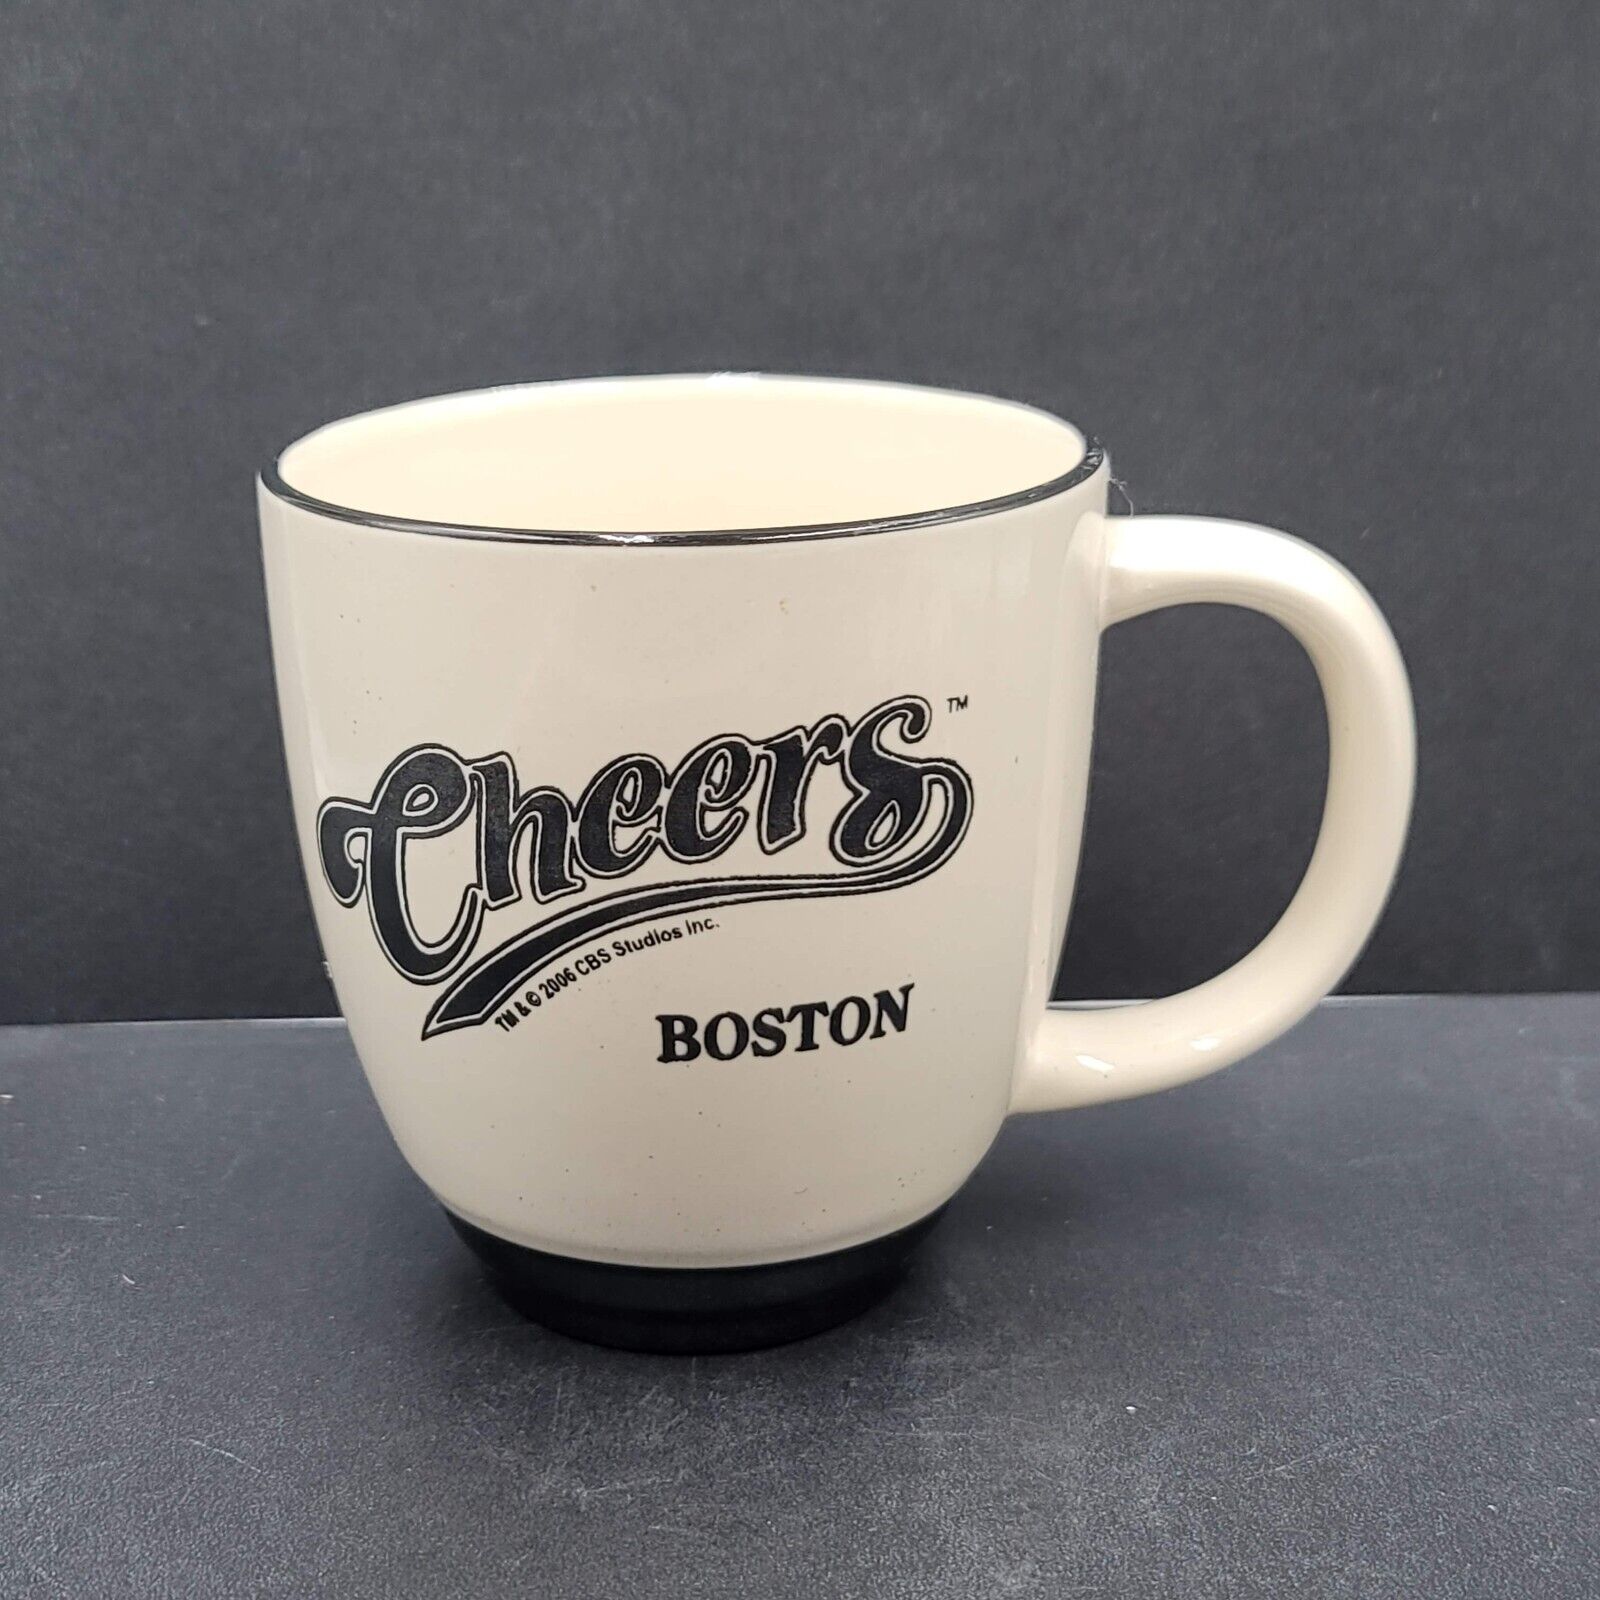 CHEERS BOSTON Coffee Mug Cup Bar Television NBC TV Show